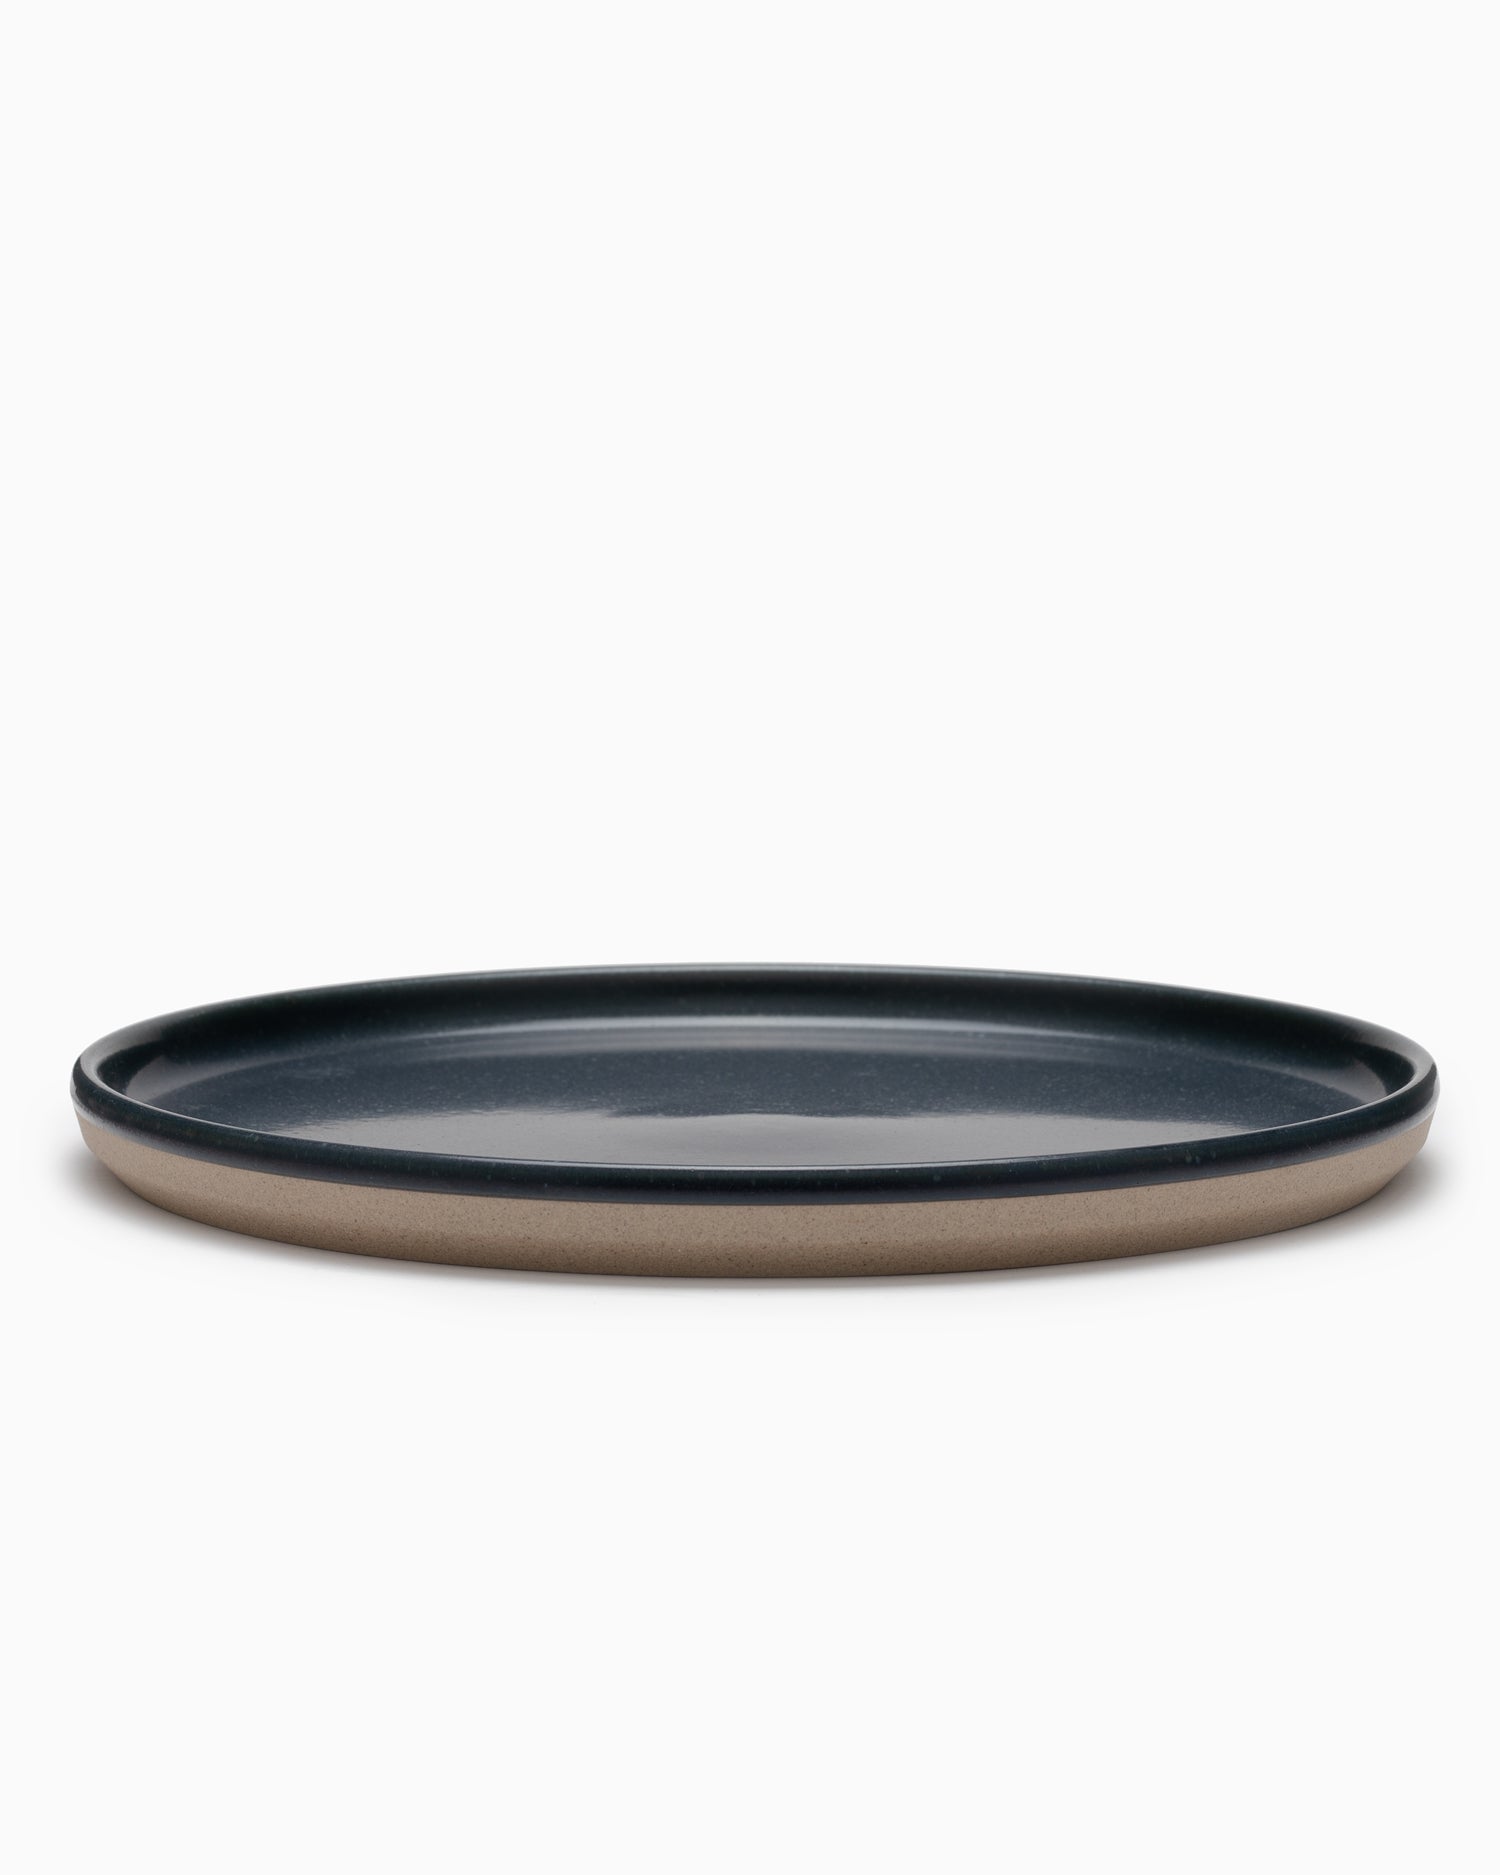 CLK-151 Large Plate - Black